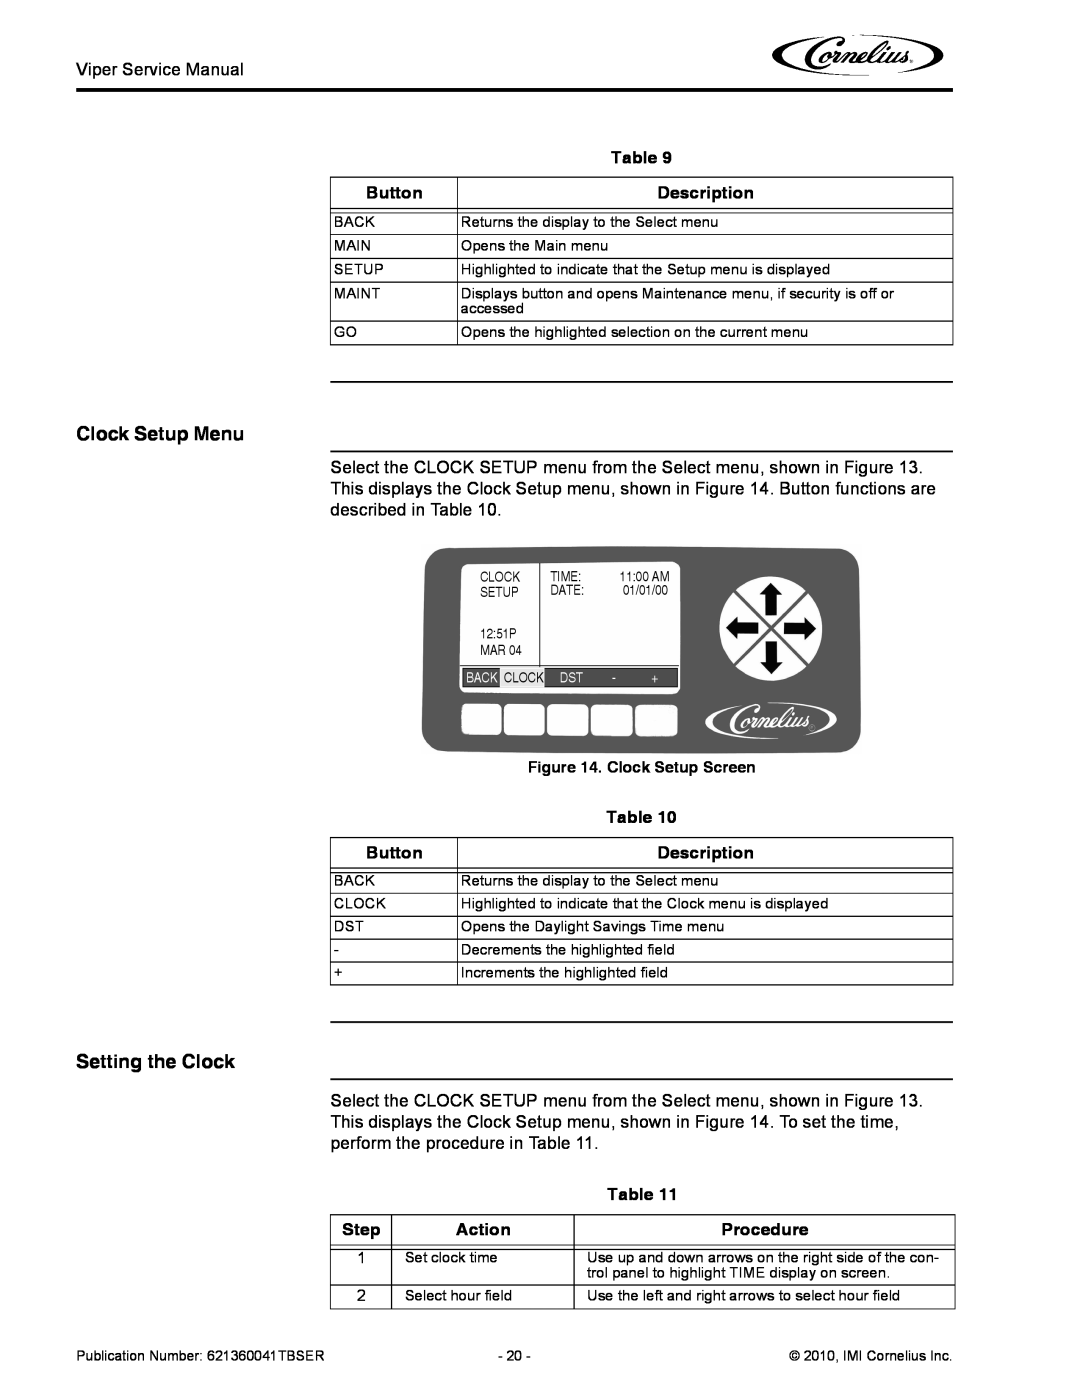 Cornelius 3 service manual Button, Description, Action, Procedure 